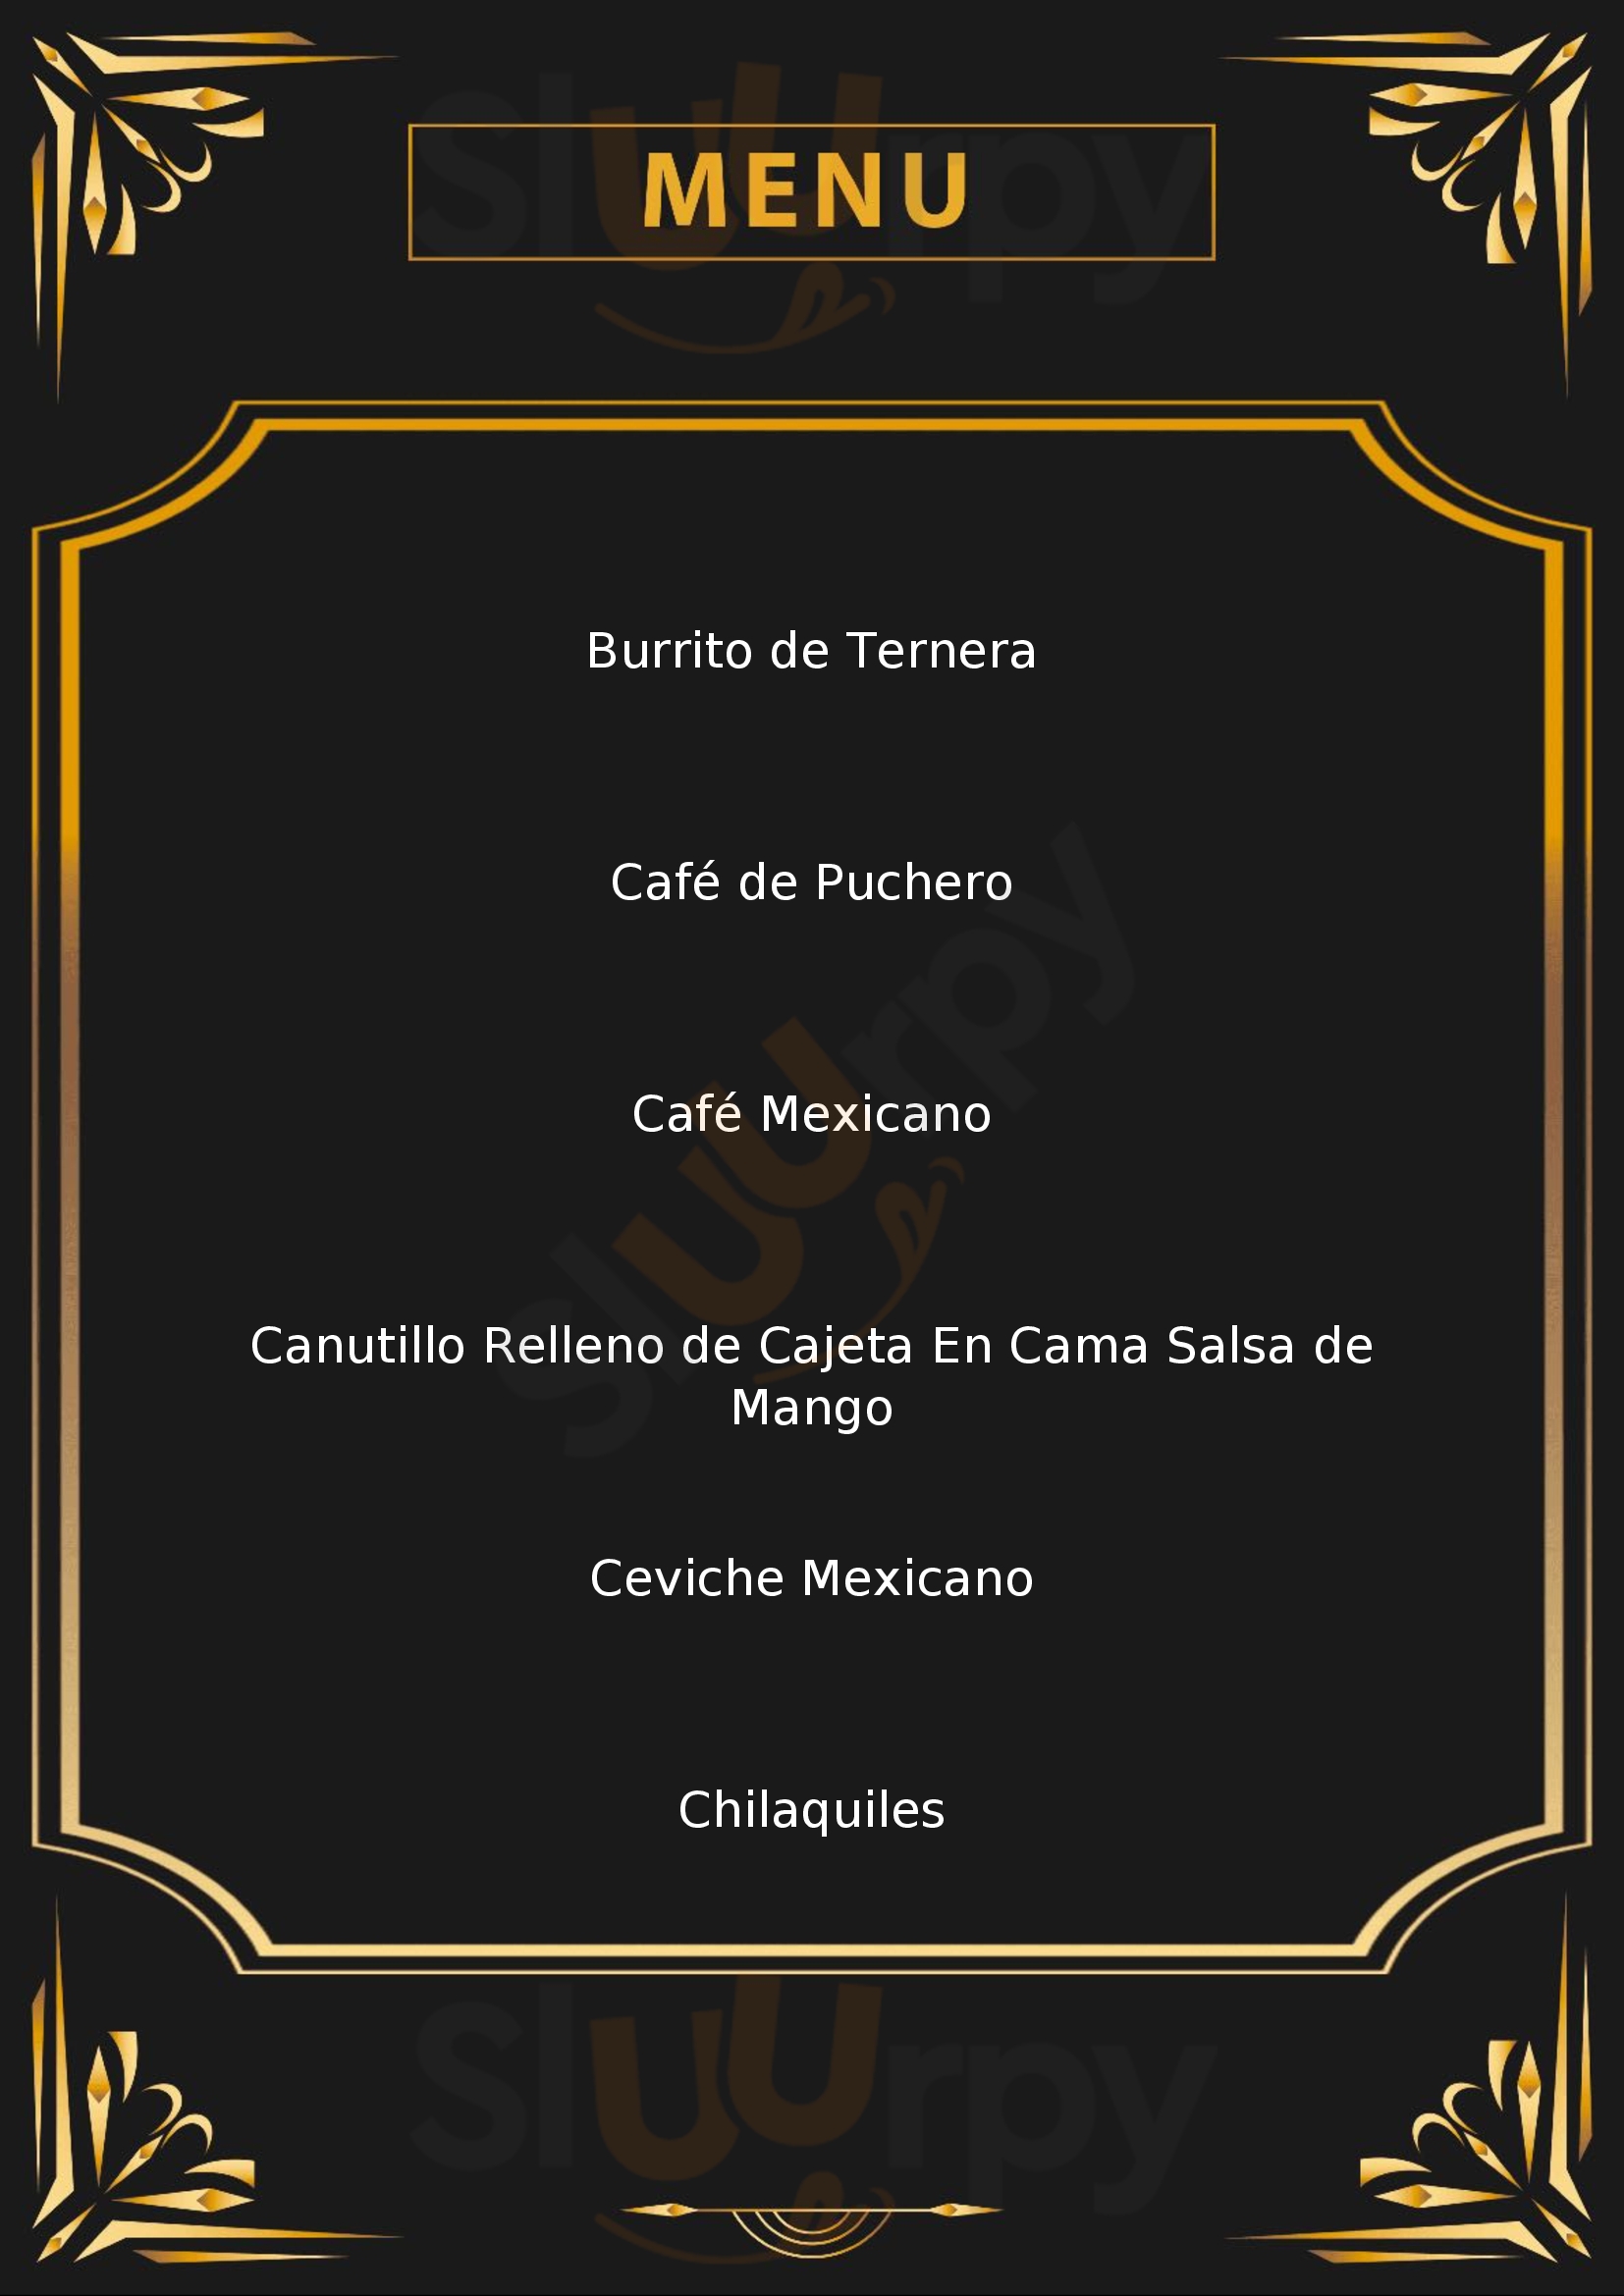 Cantina Mexicana Tapachula Bilbao Menu - 1